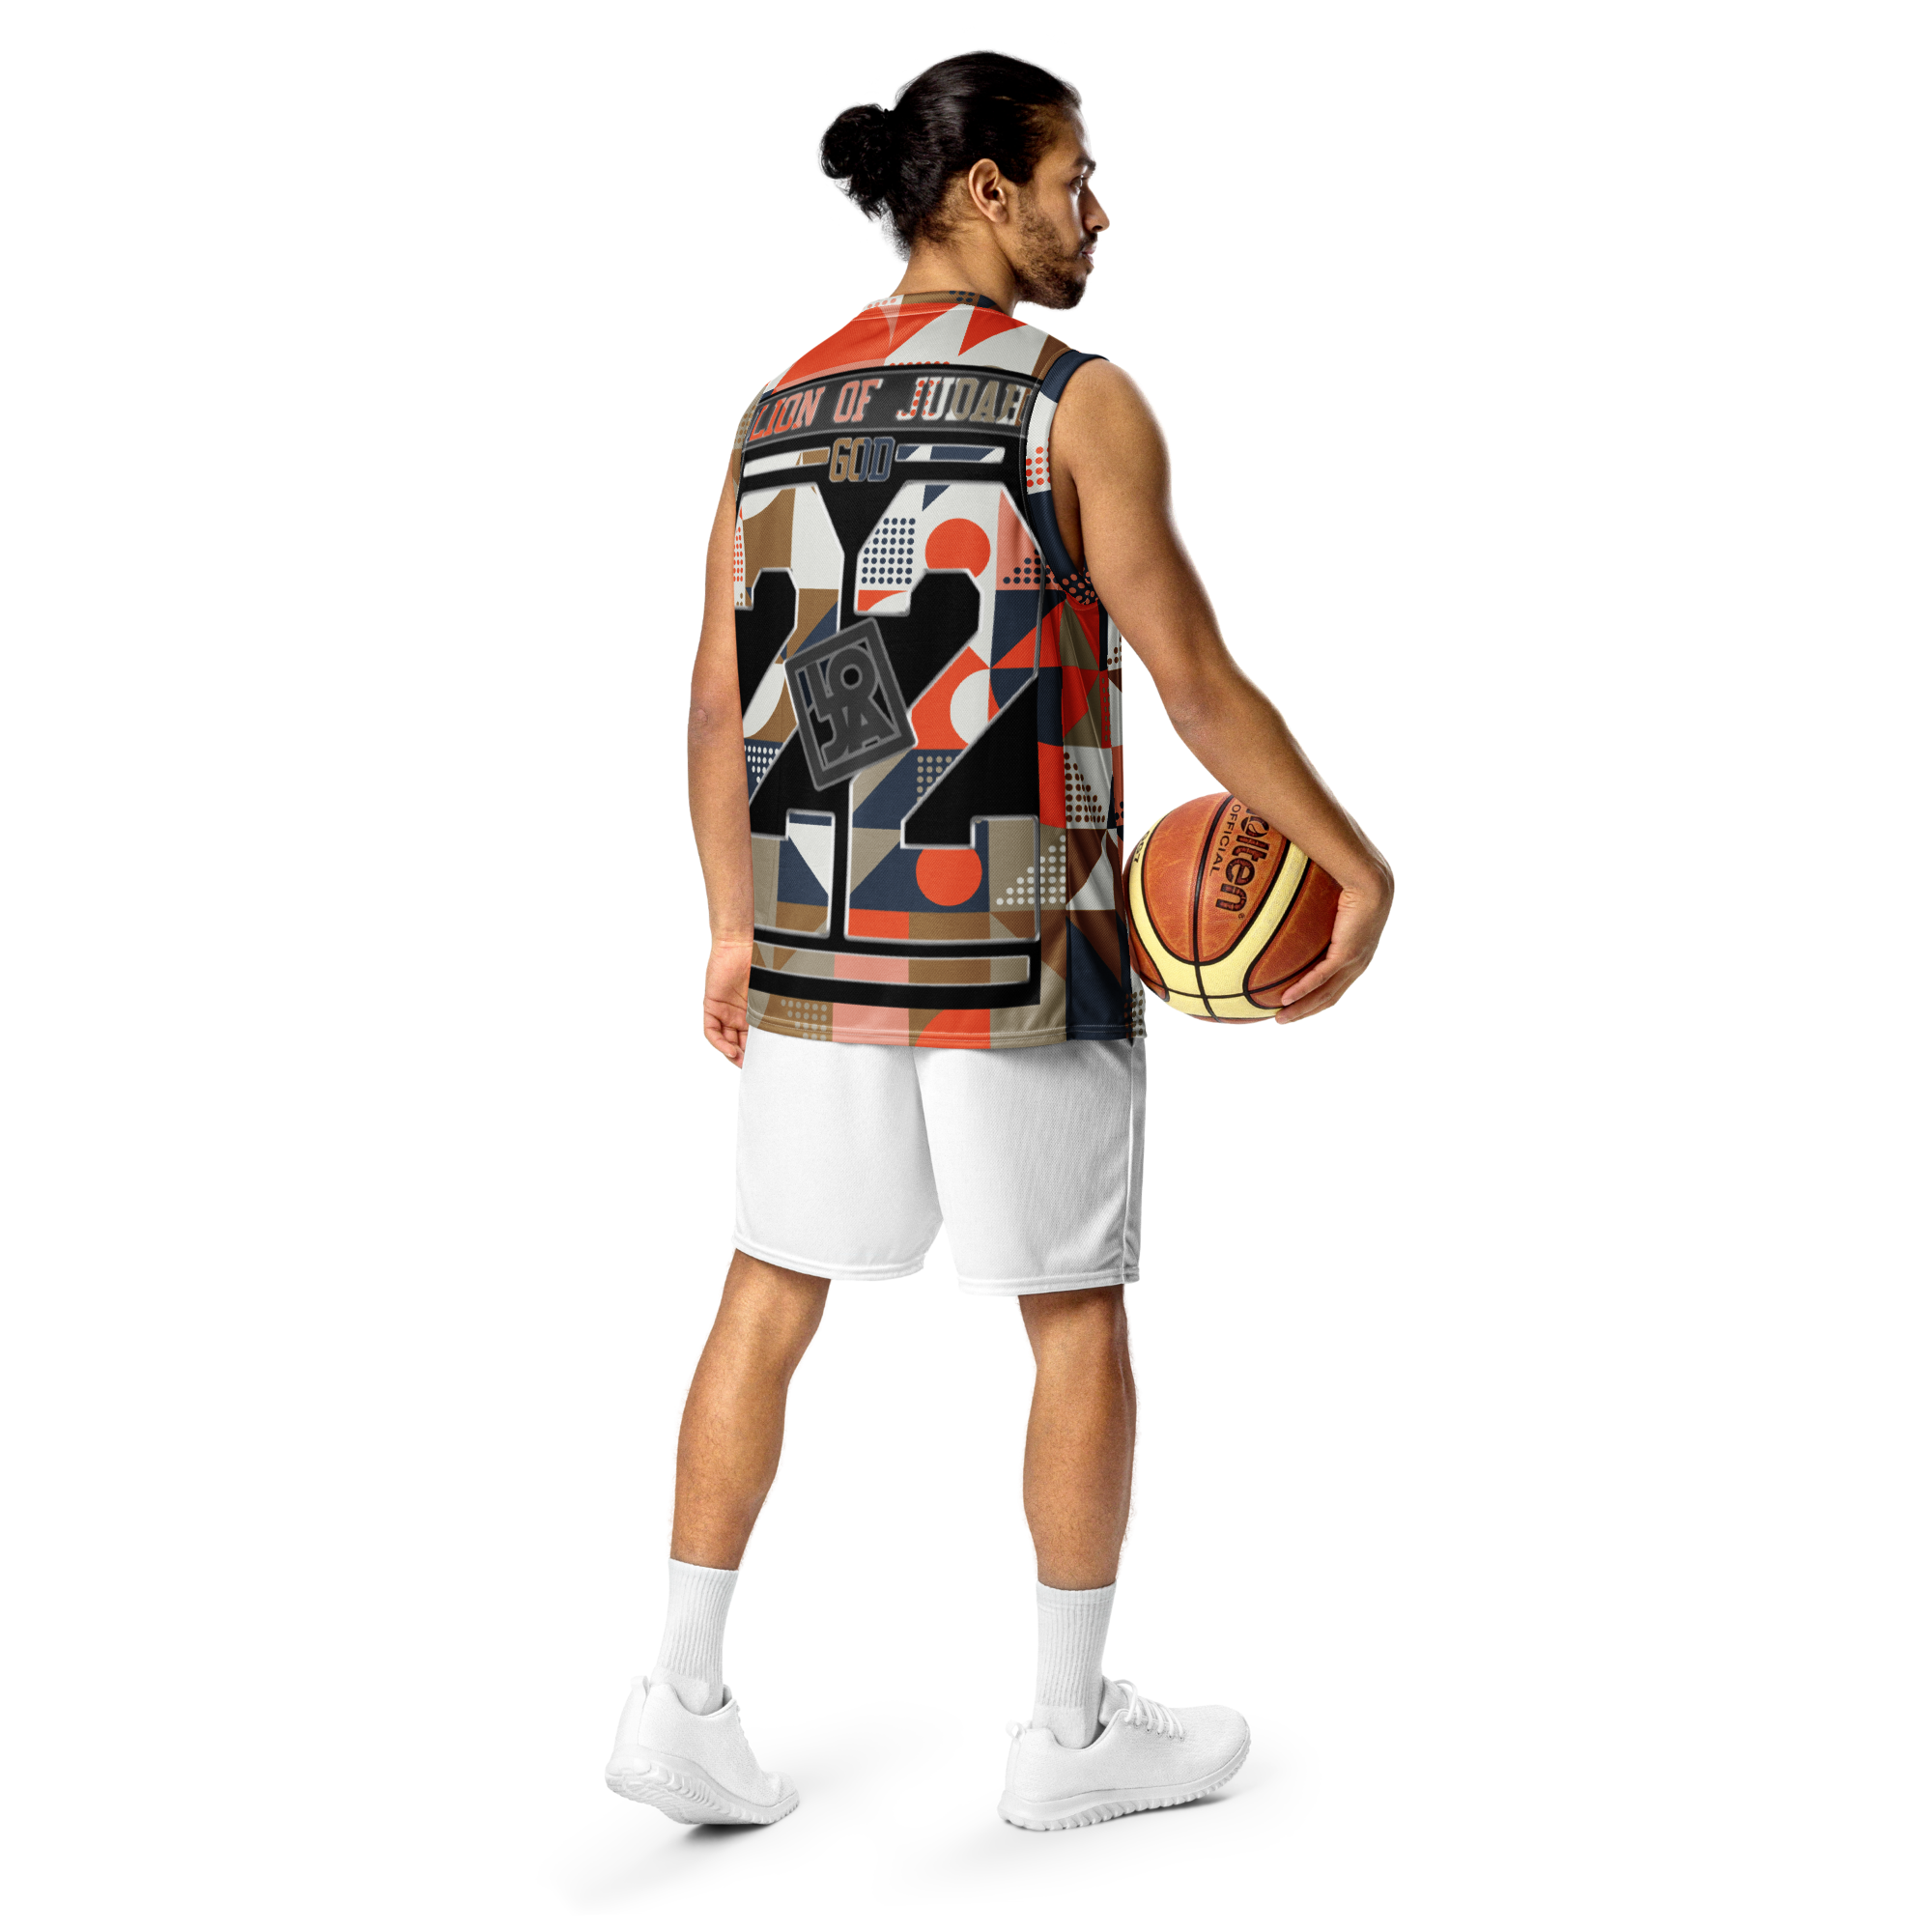 Lion Of Judah God Design Recycled unisex Design basketball jersey